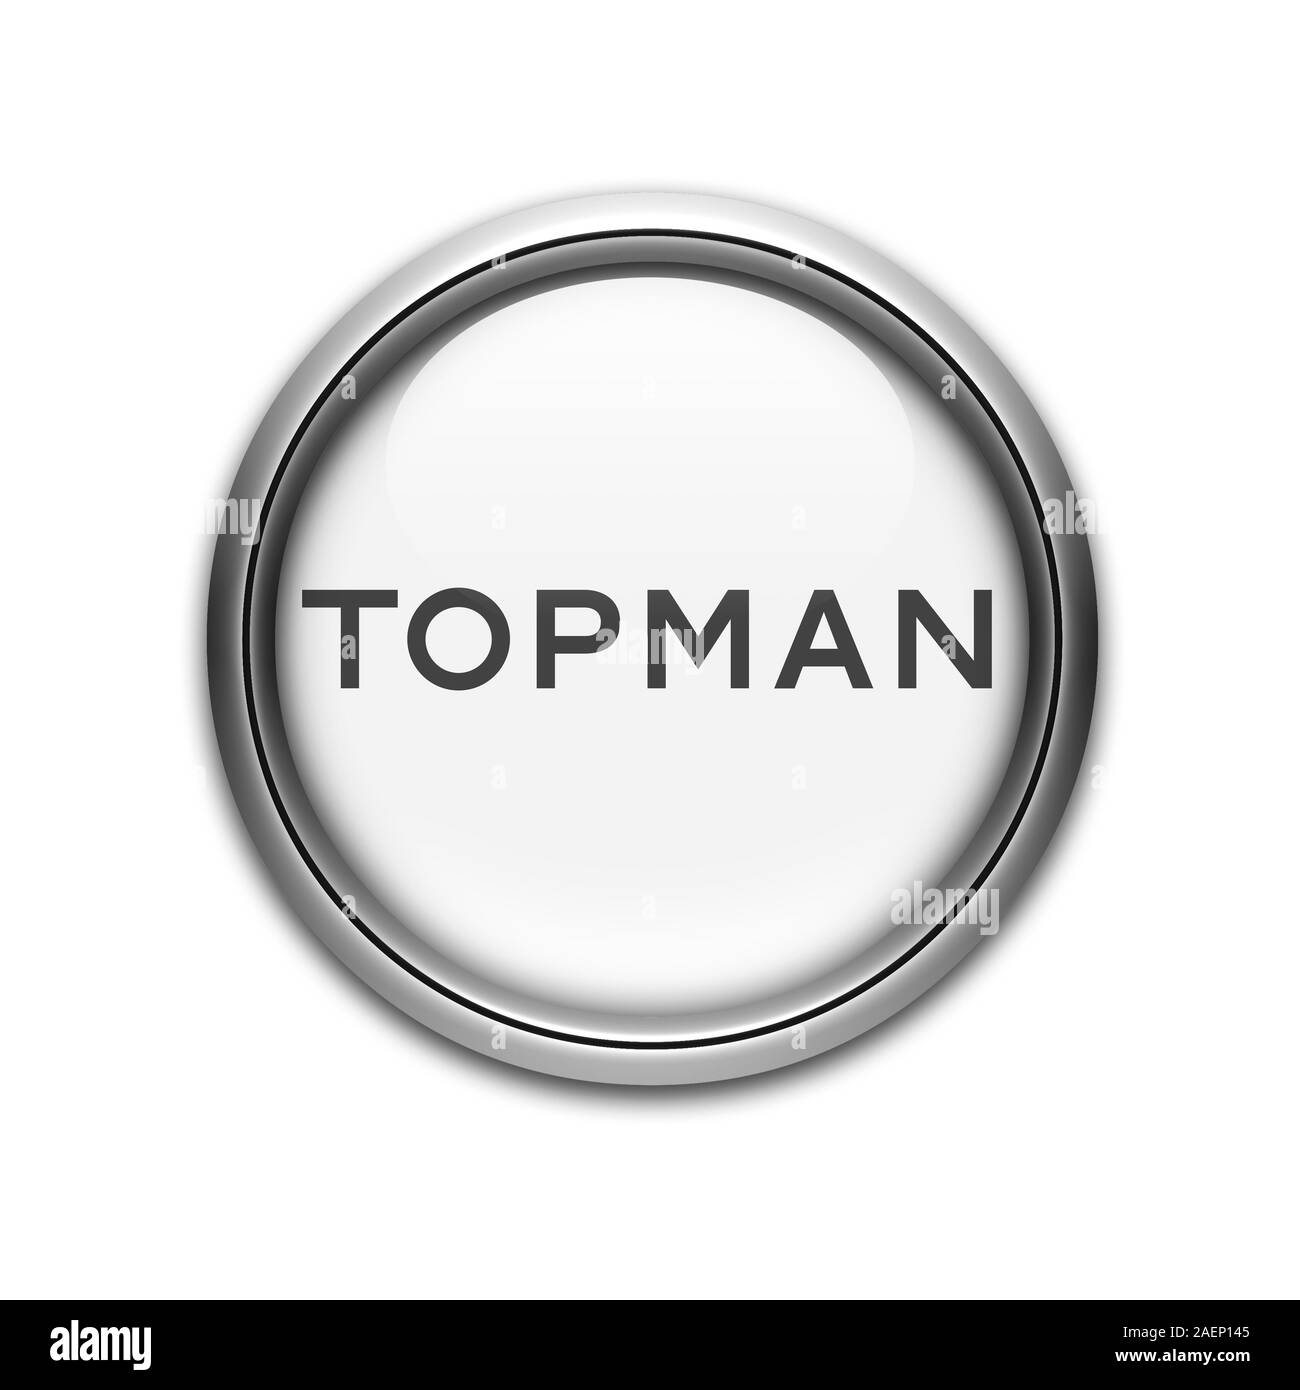 Topman logo Black and White Stock Photos & Images - Alamy